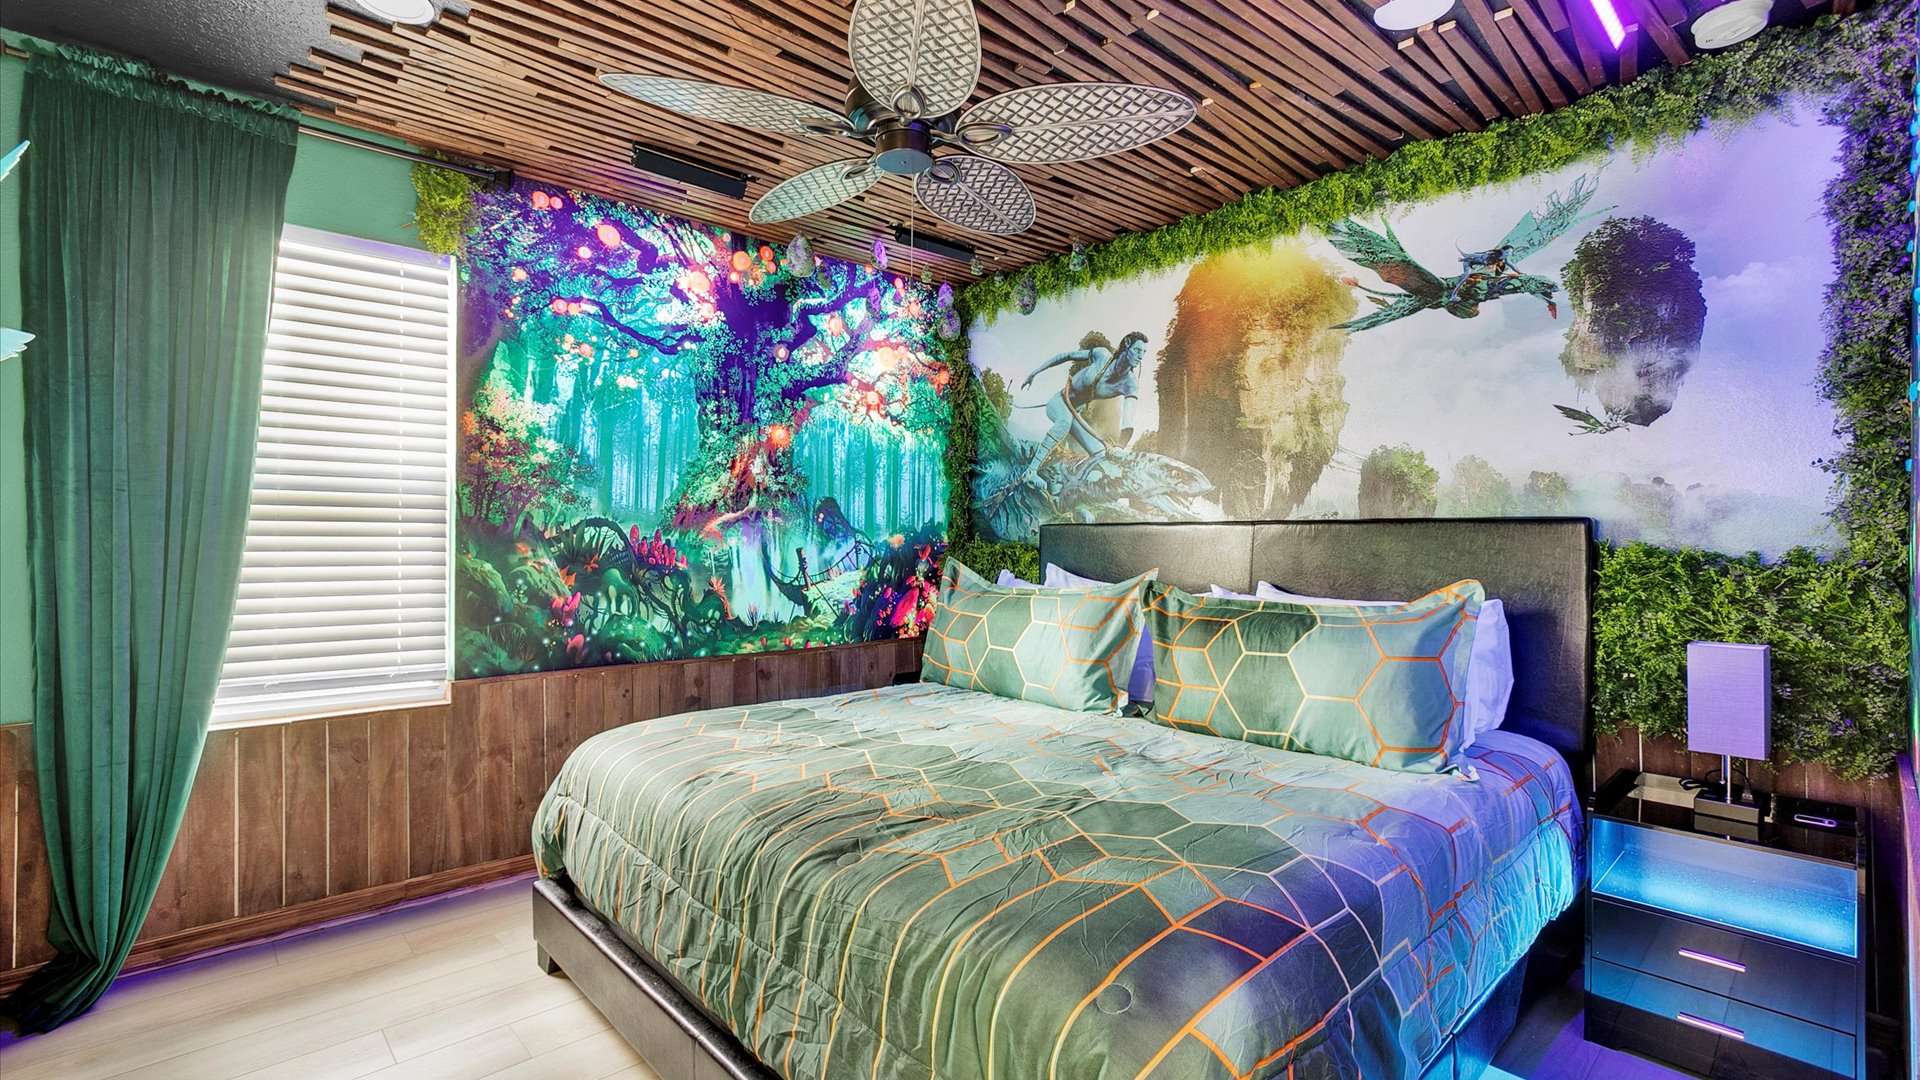 King Bedroom 6 Upstairs
Shared Bathroom
Avatar Theme